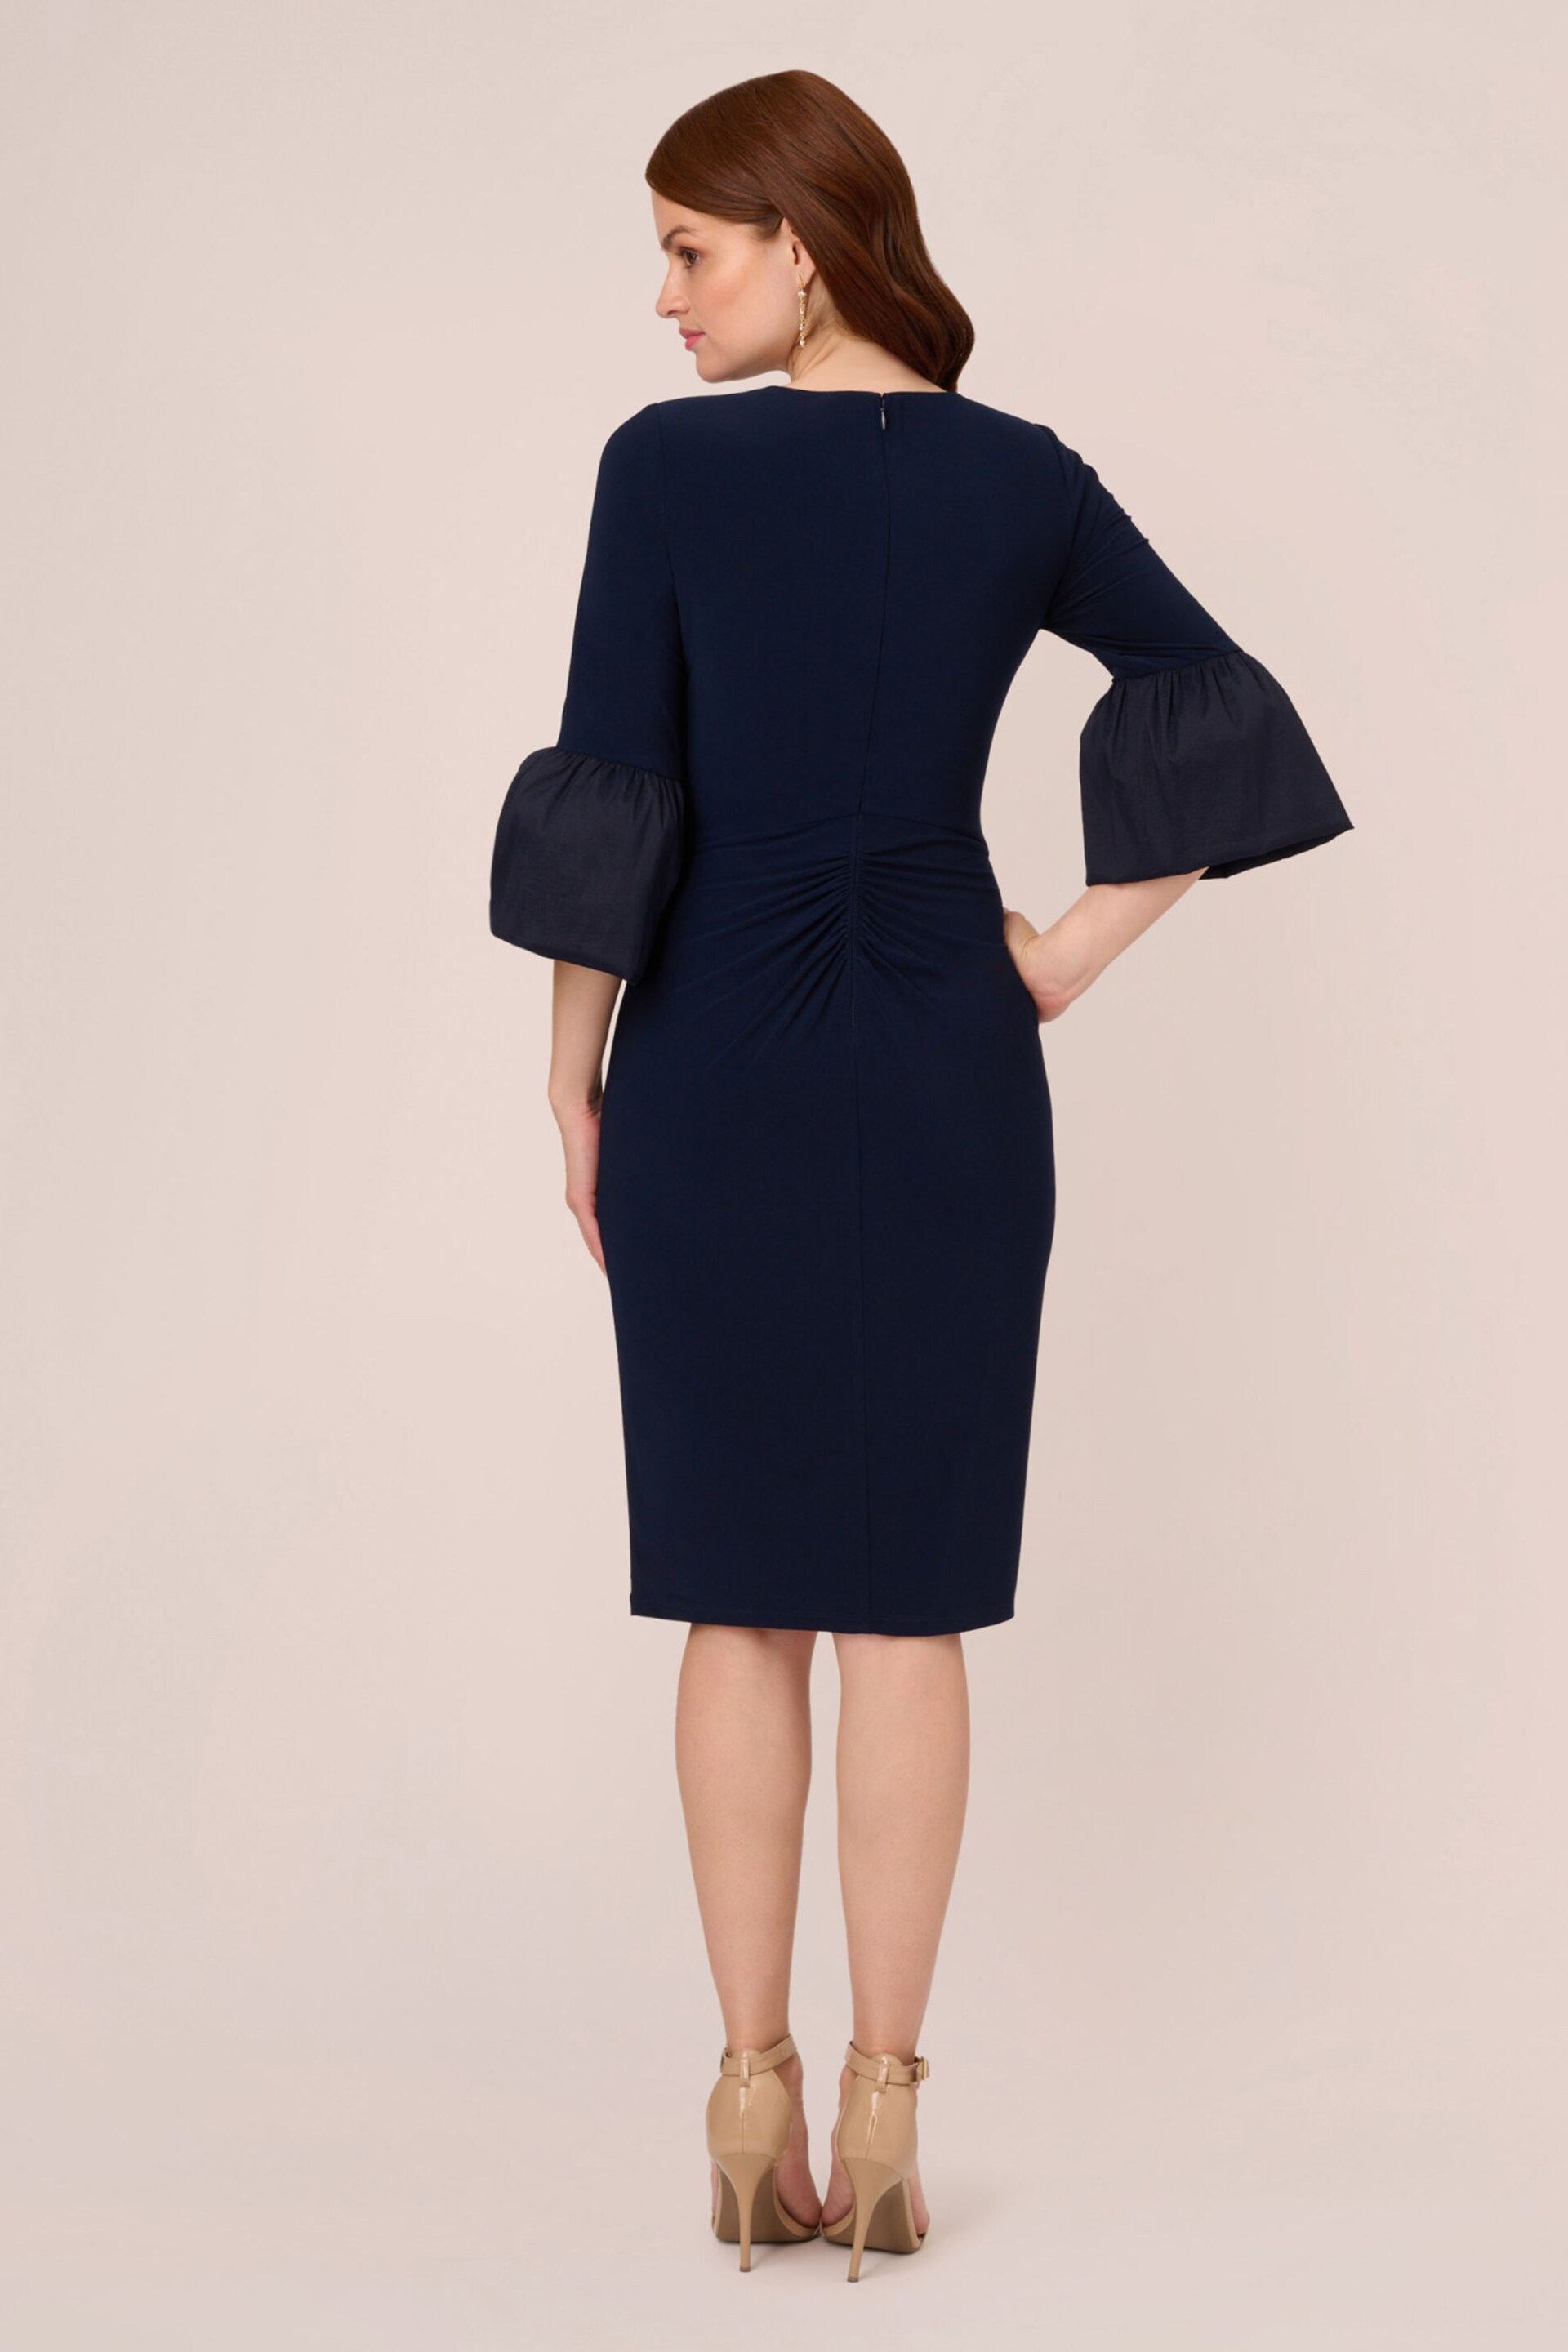 Adrianna Papell Blue Jersey And Taffeta Midi Dress - Image 2 of 7